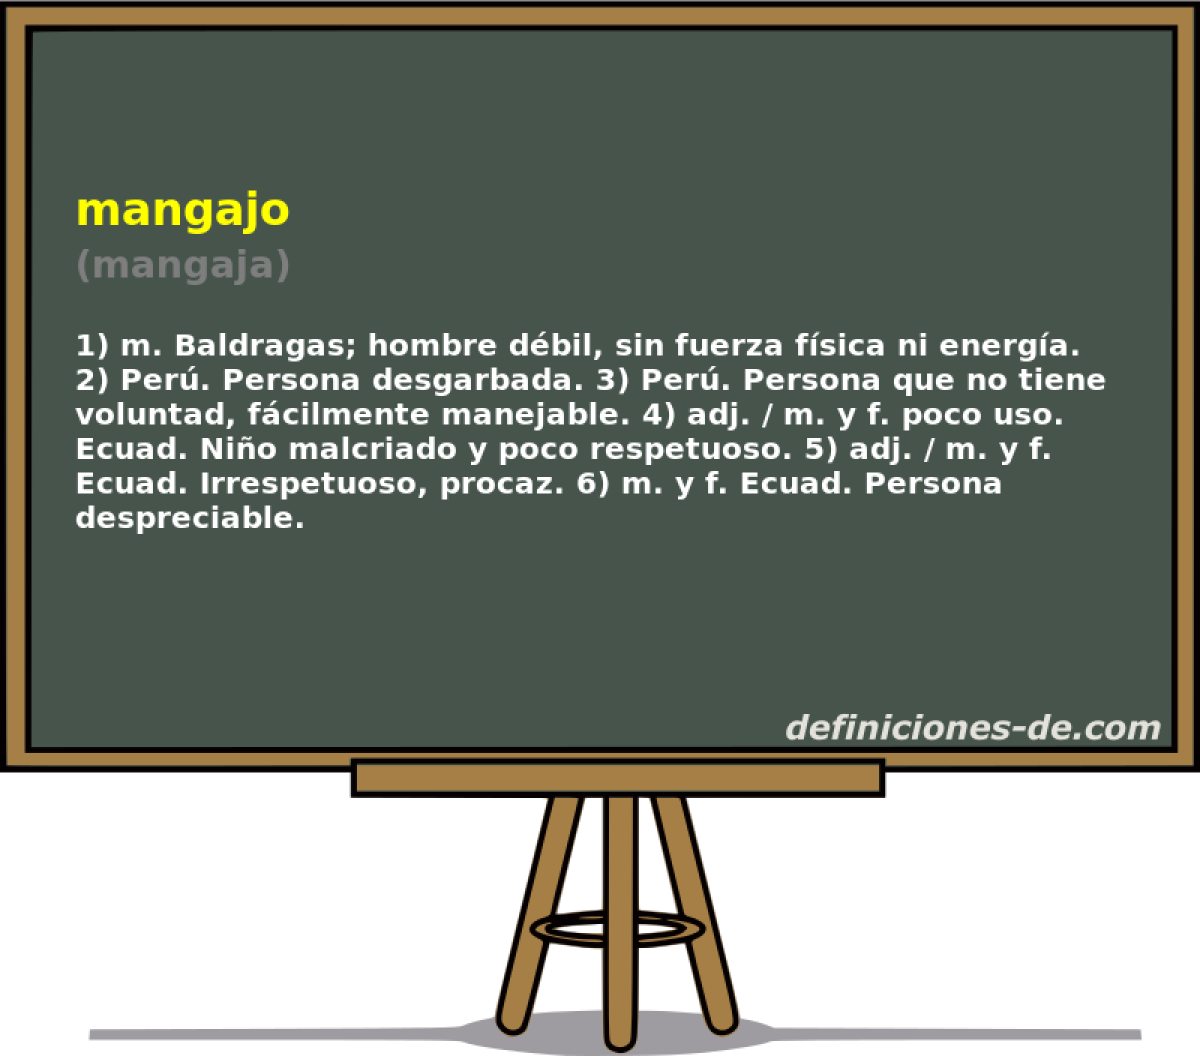 mangajo (mangaja)